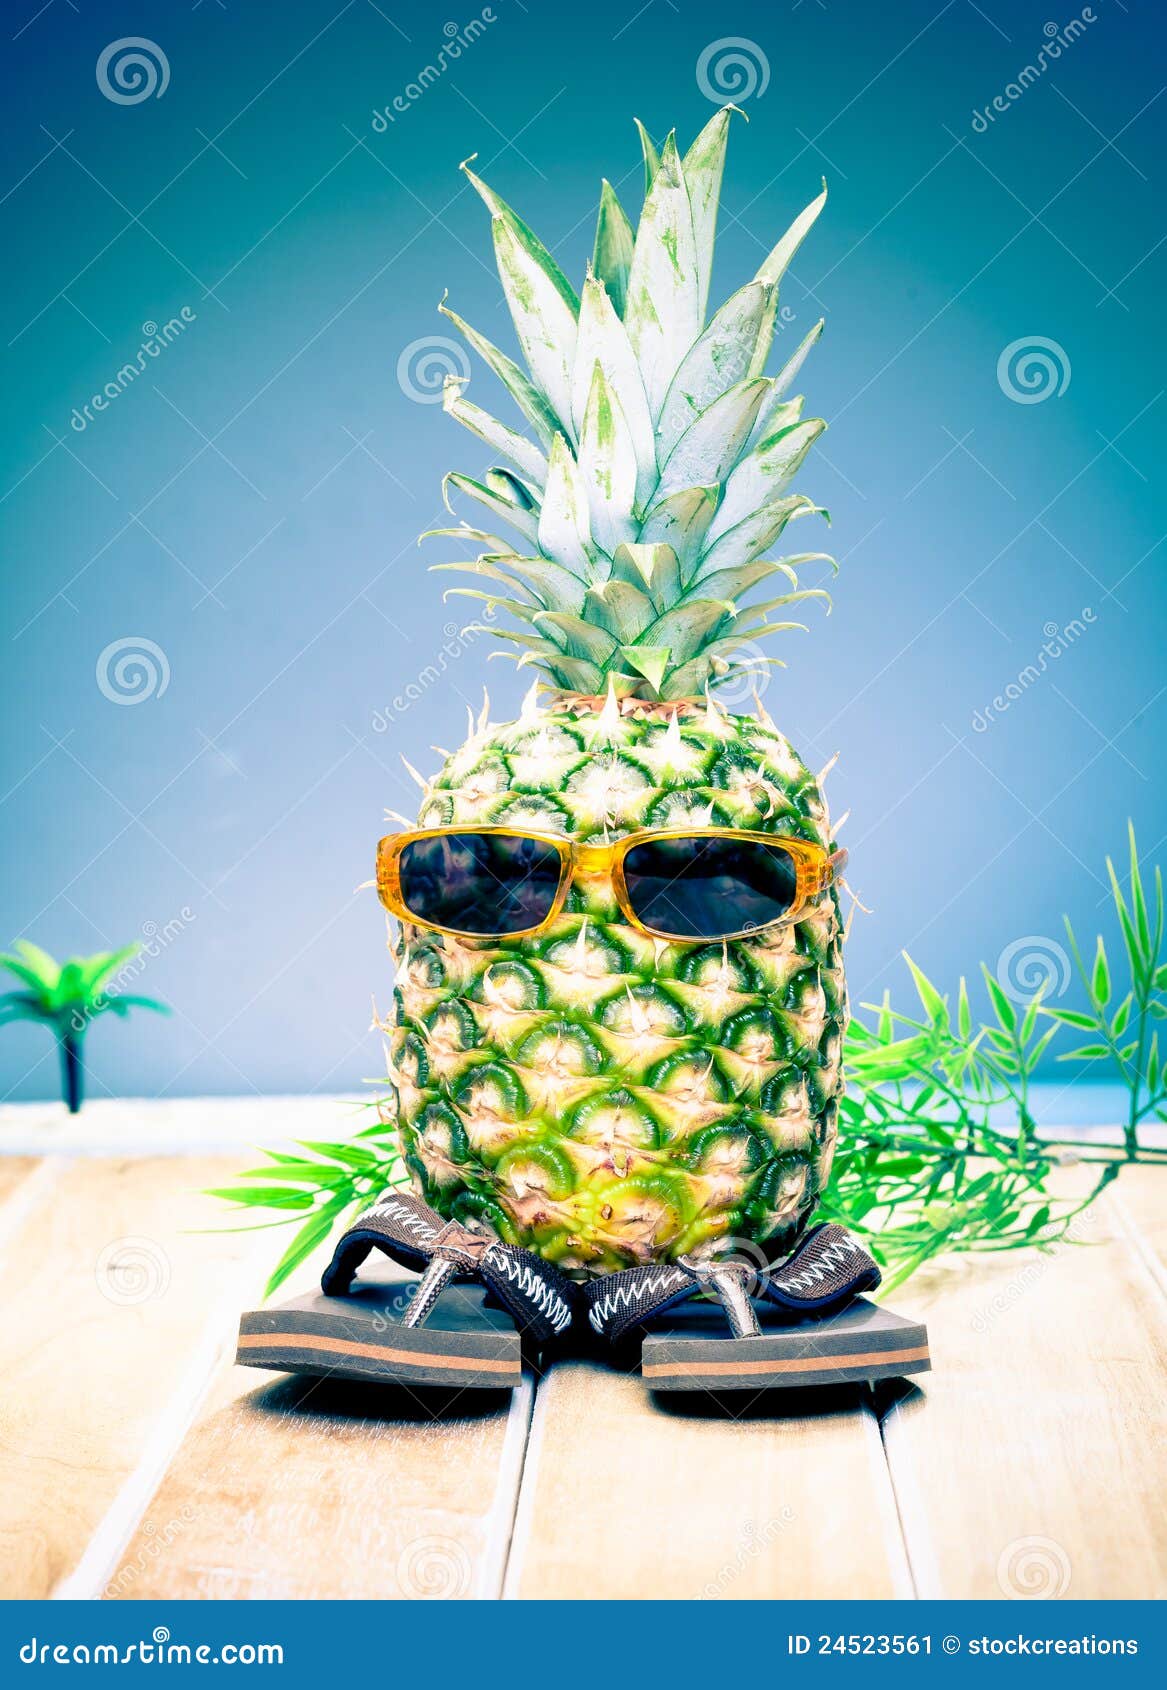 cool dude pineapple